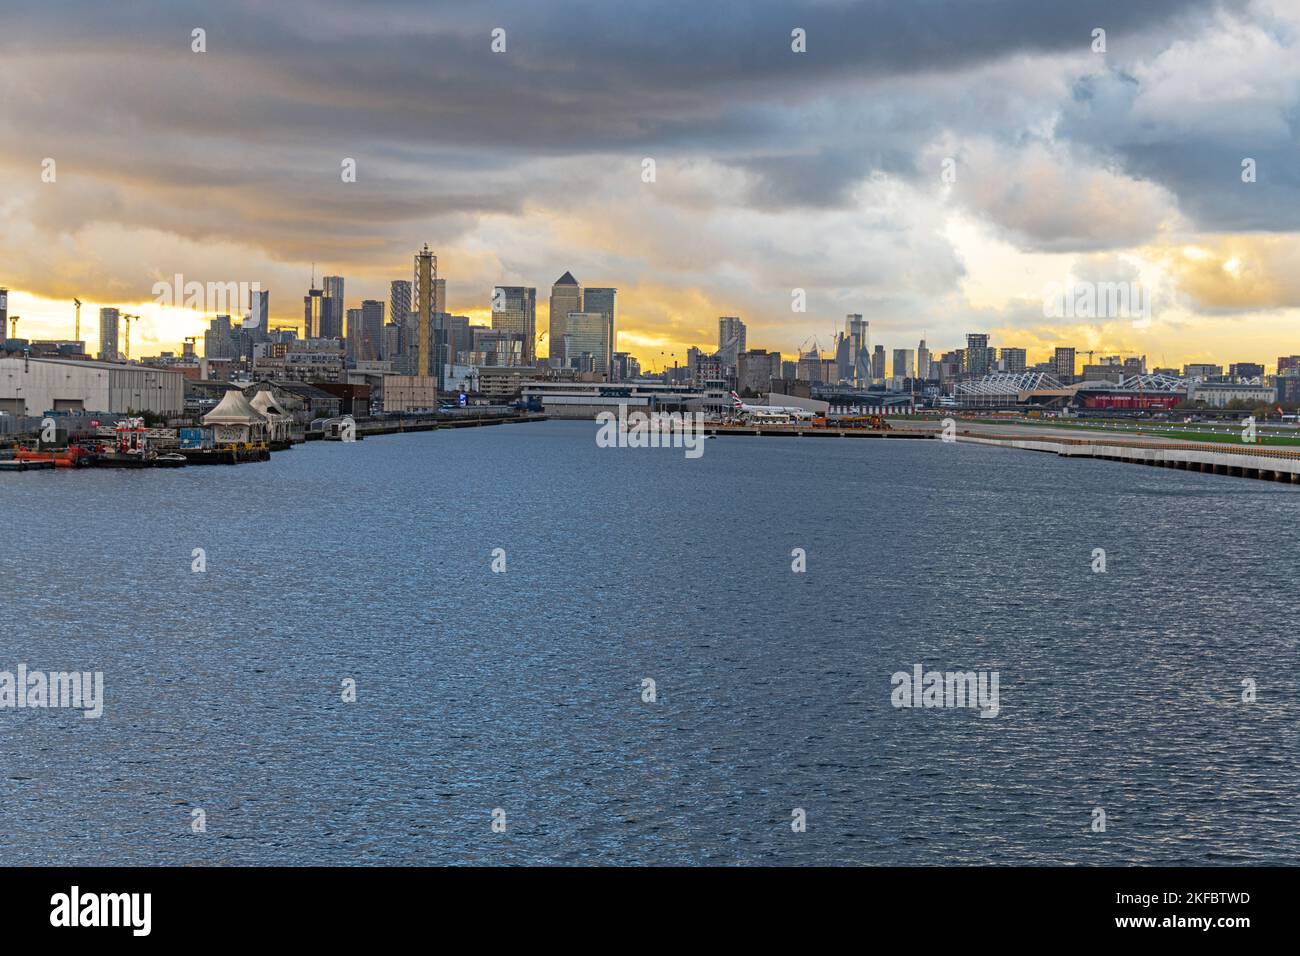 Royal Albert Docks, Flughafen London City und Canary Wharf bei Sonnenuntergang. Stockfoto